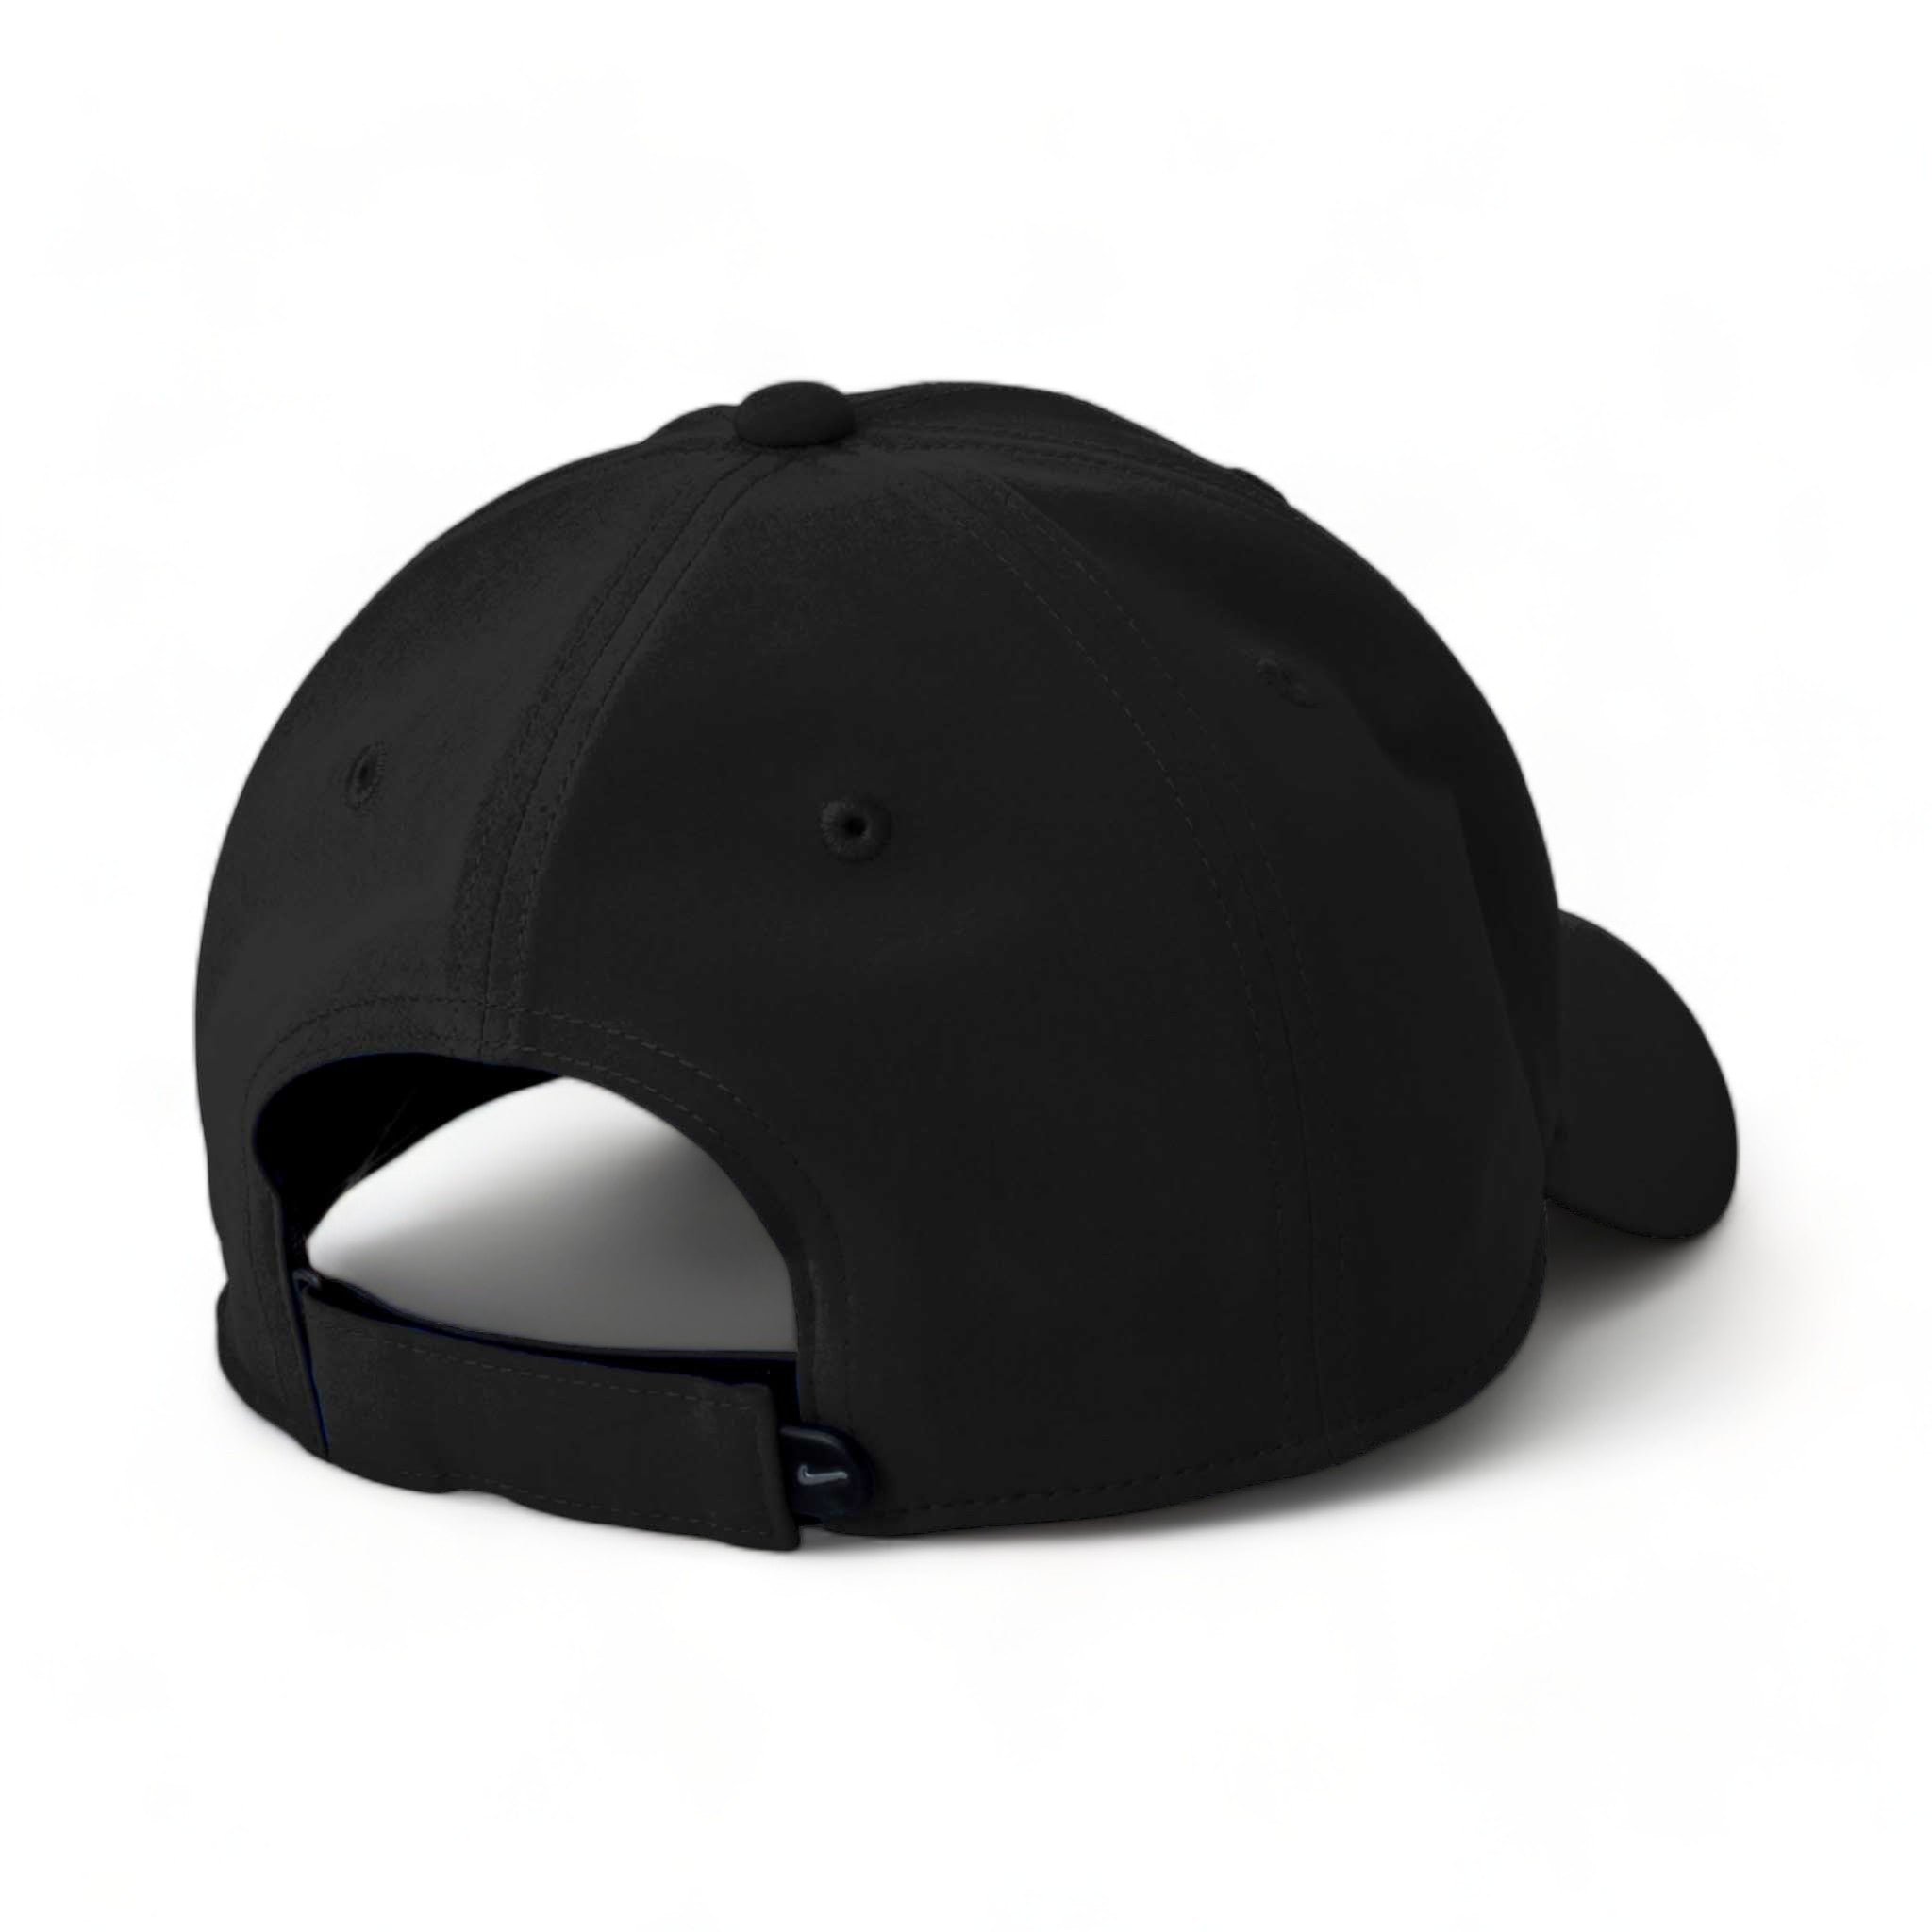 Back view of Nike NKFB6447 custom hat in black